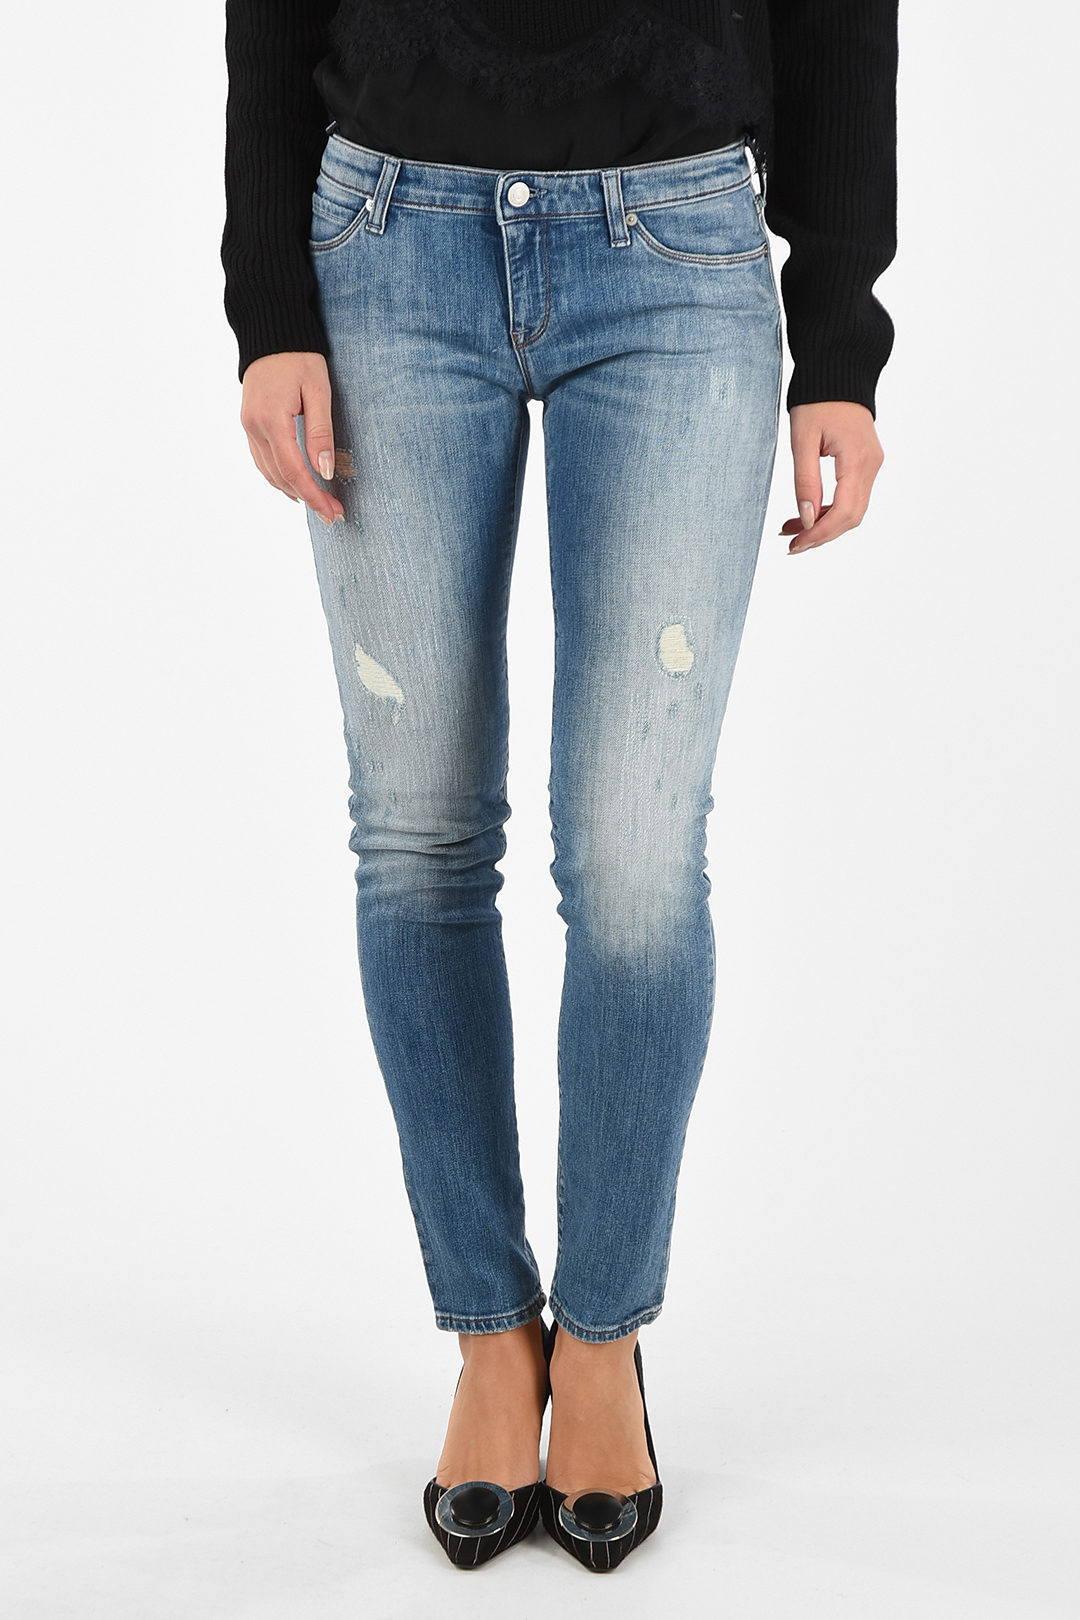 Armani ARMANI JEANS Skinny Fit LOTUS Jeans women - Glamood Outlet